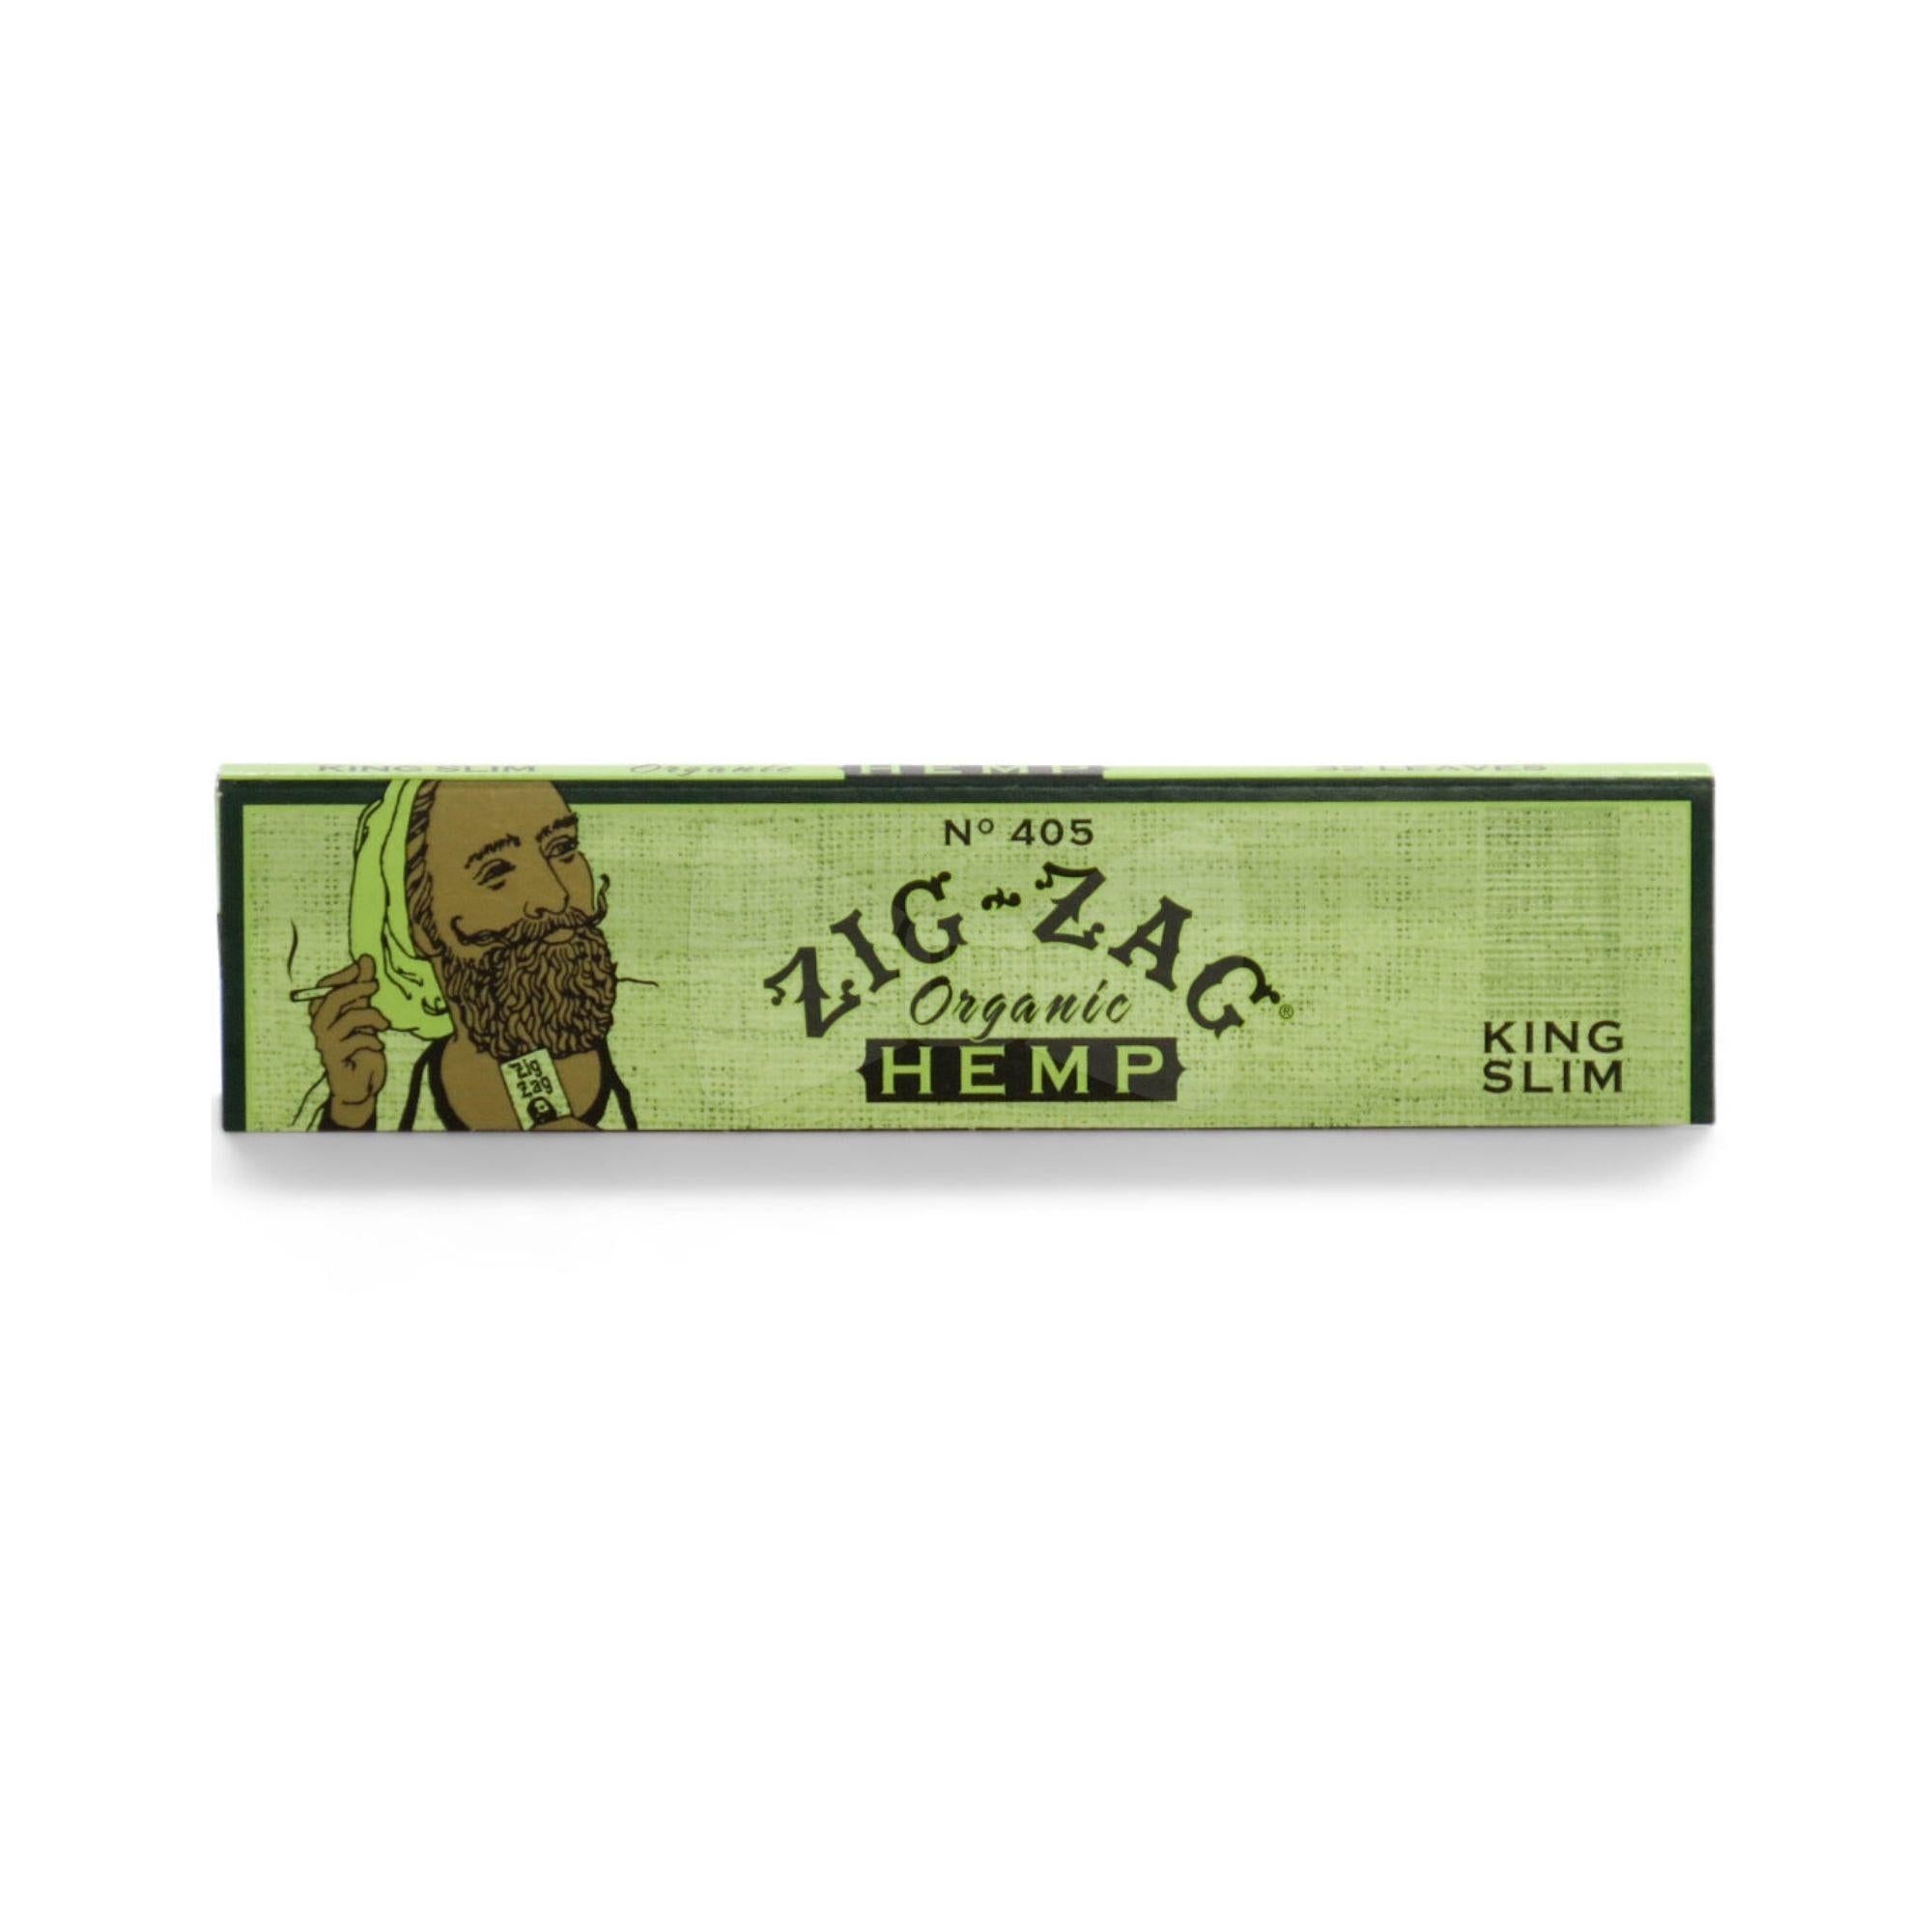 Zig Zag Organic Hemp King Slim Rolling Papers 1 Pack